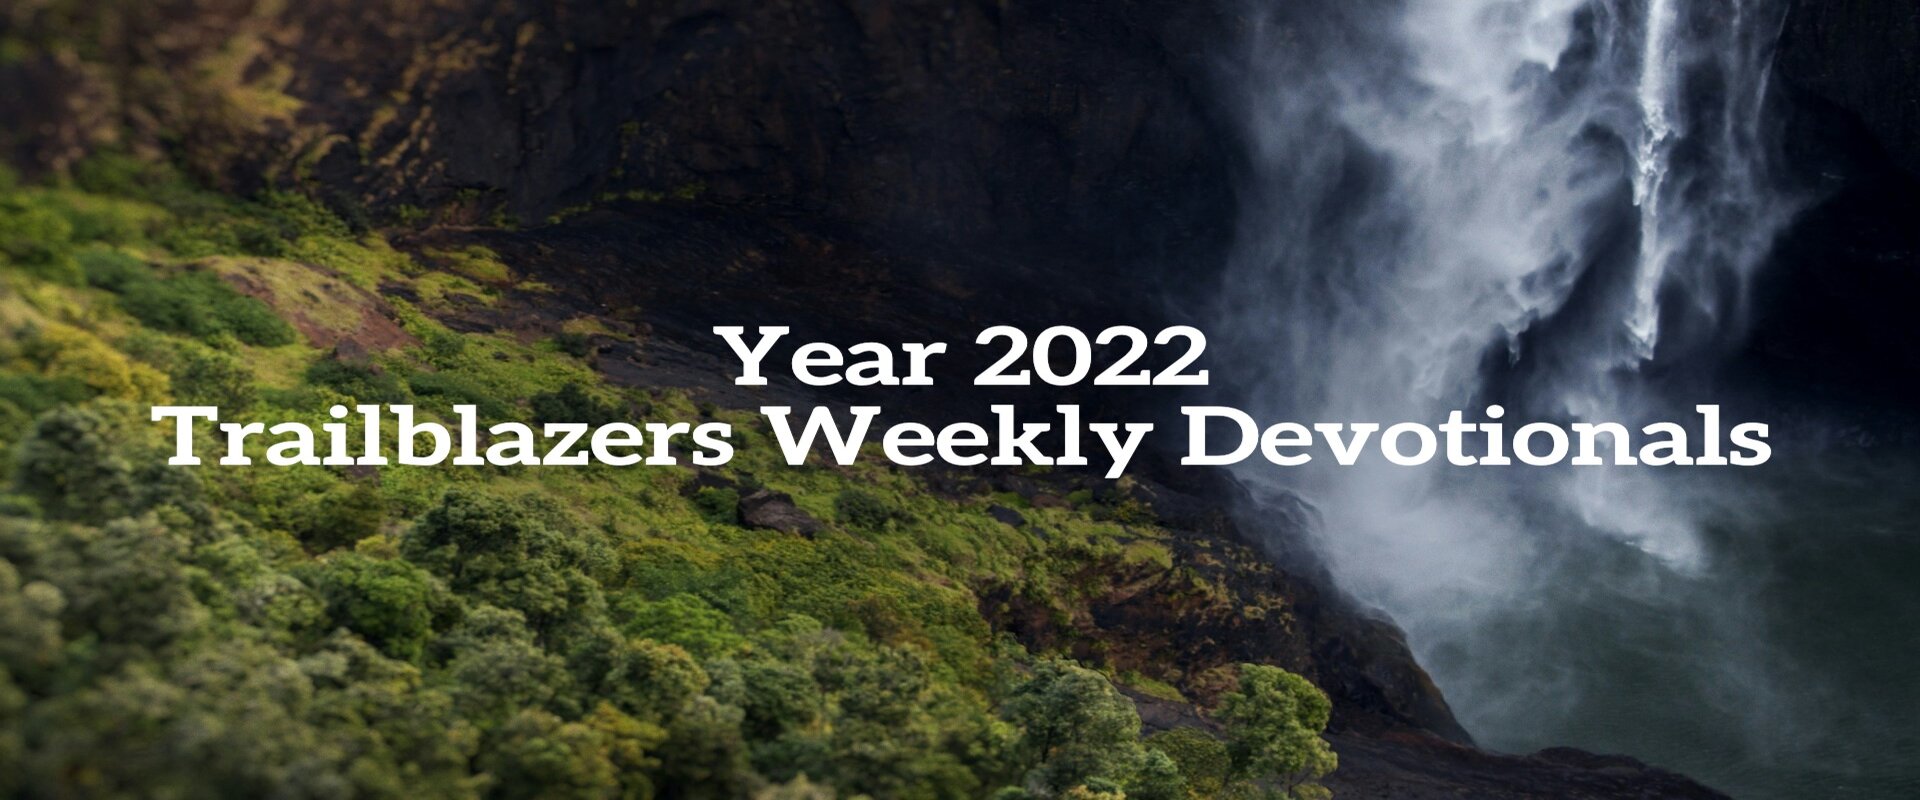 Year 2022 Trailblazers Weekly Devotionals